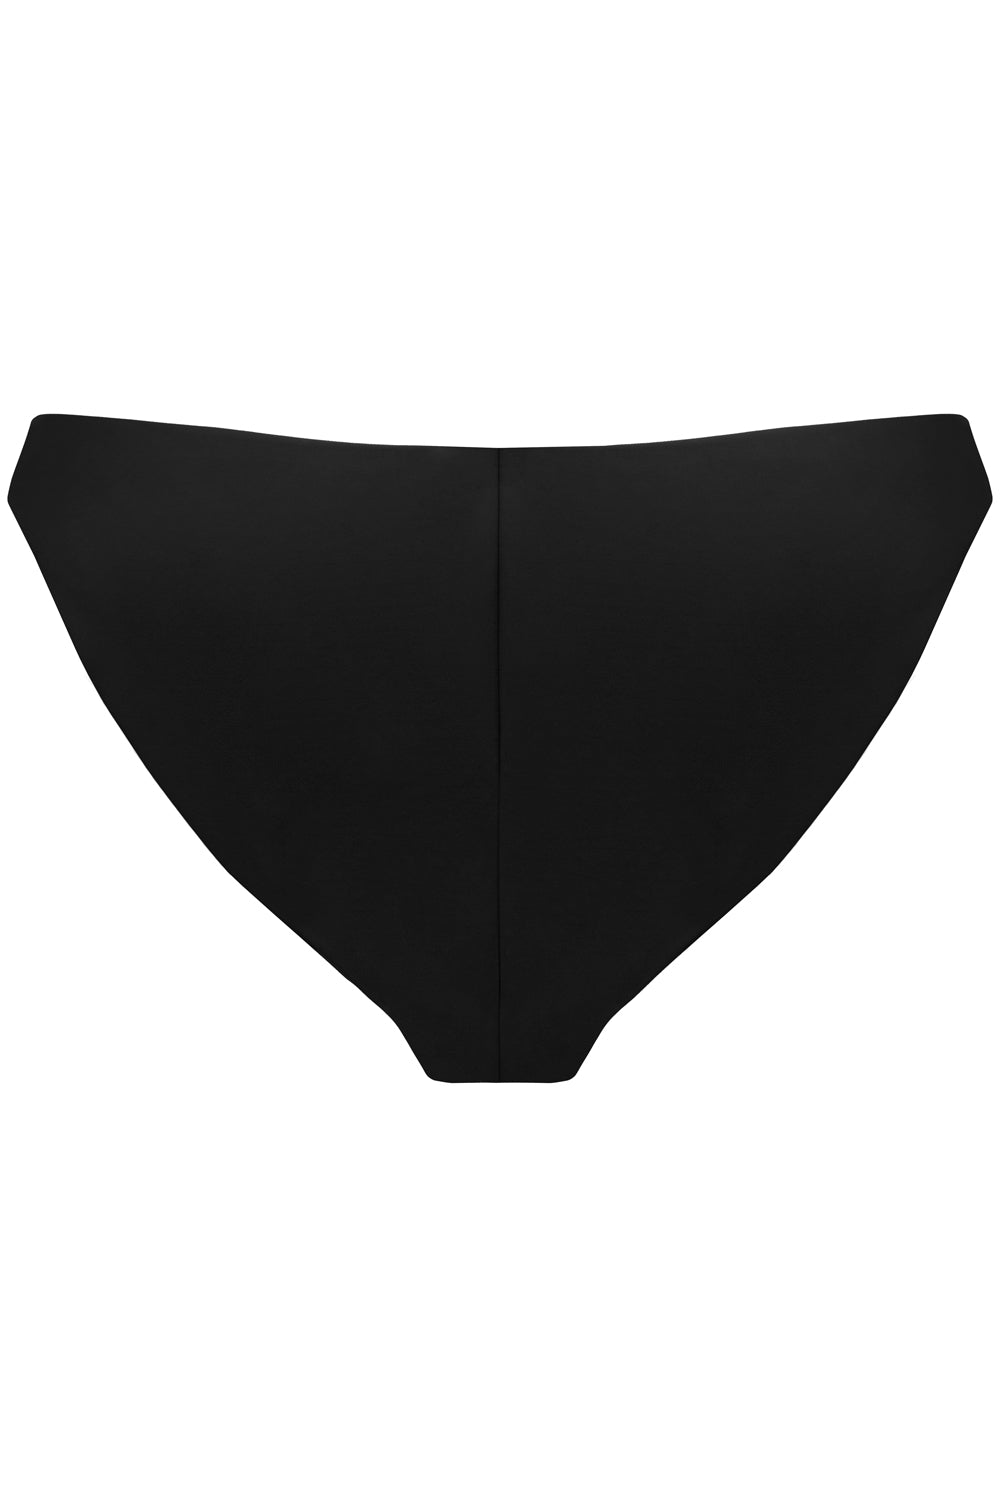 Radiya Floral Black bikini bottom